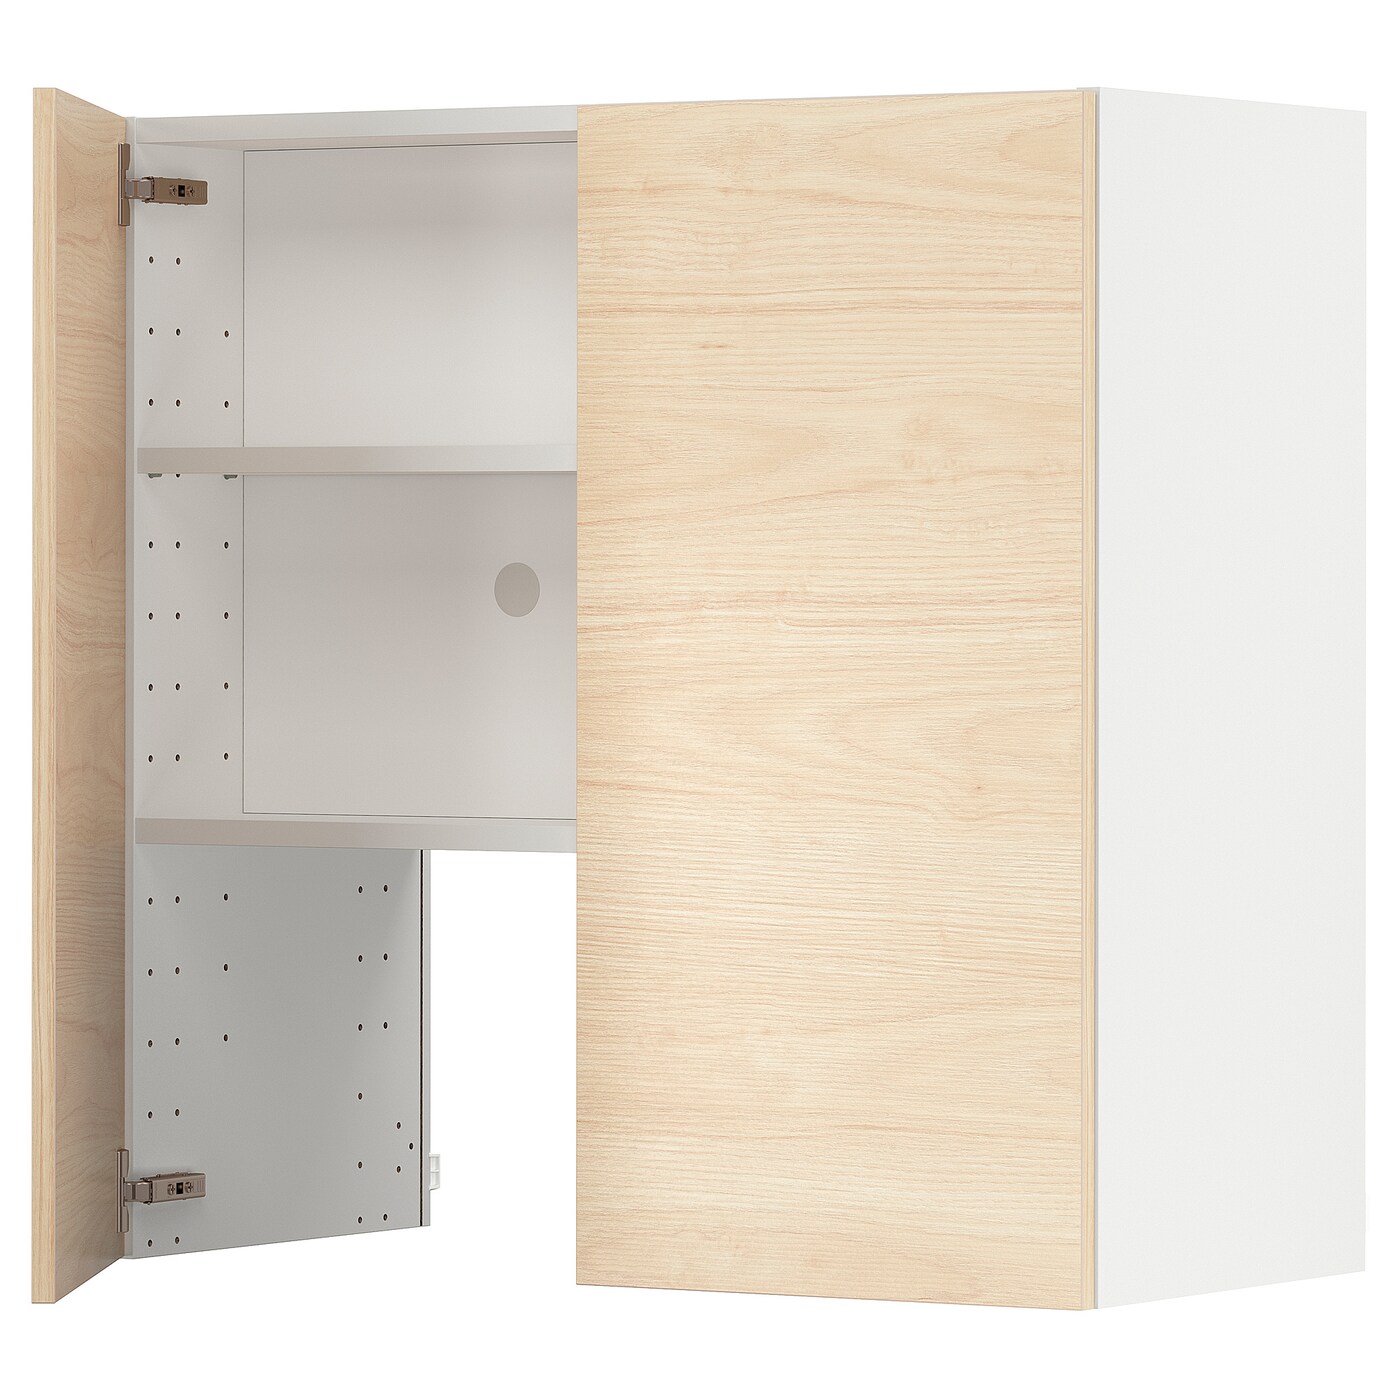 METOD Навесной шкаф - METOD IKEA/ МЕТОД ИКЕА, 80х80 см, белый/под беленый дуб